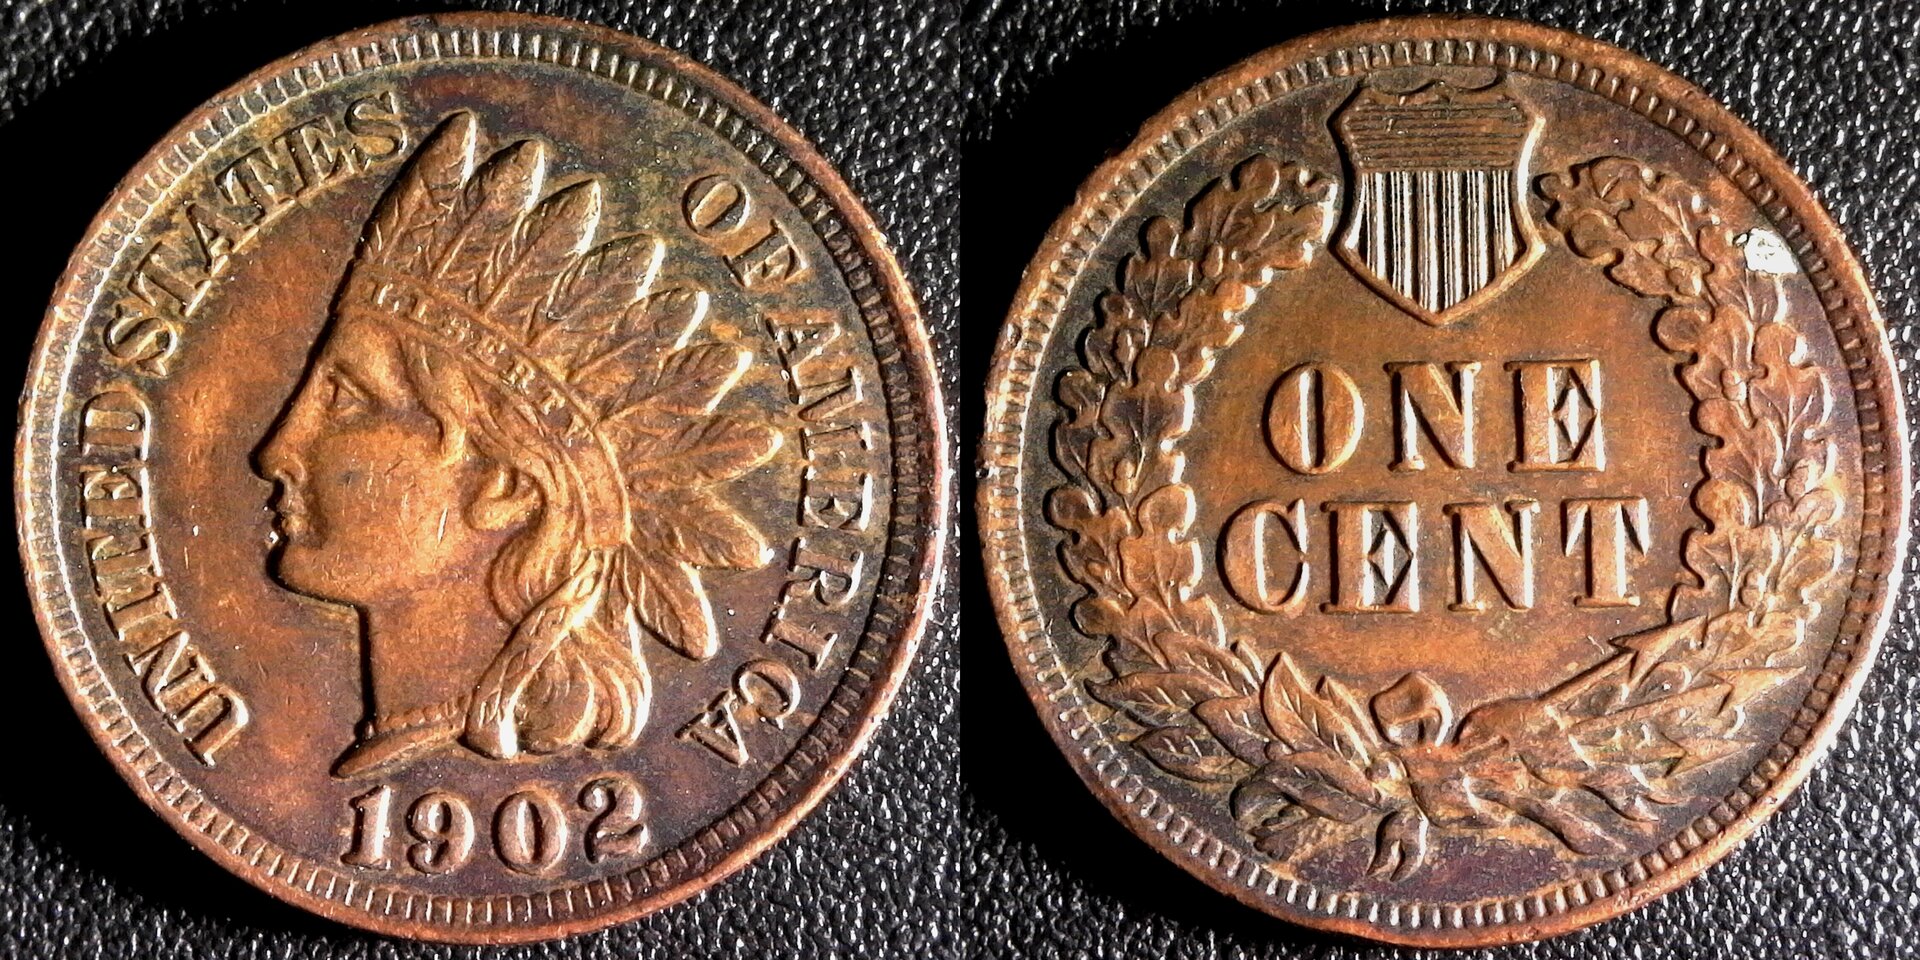 United States Cent 1902 obv-side.jpg